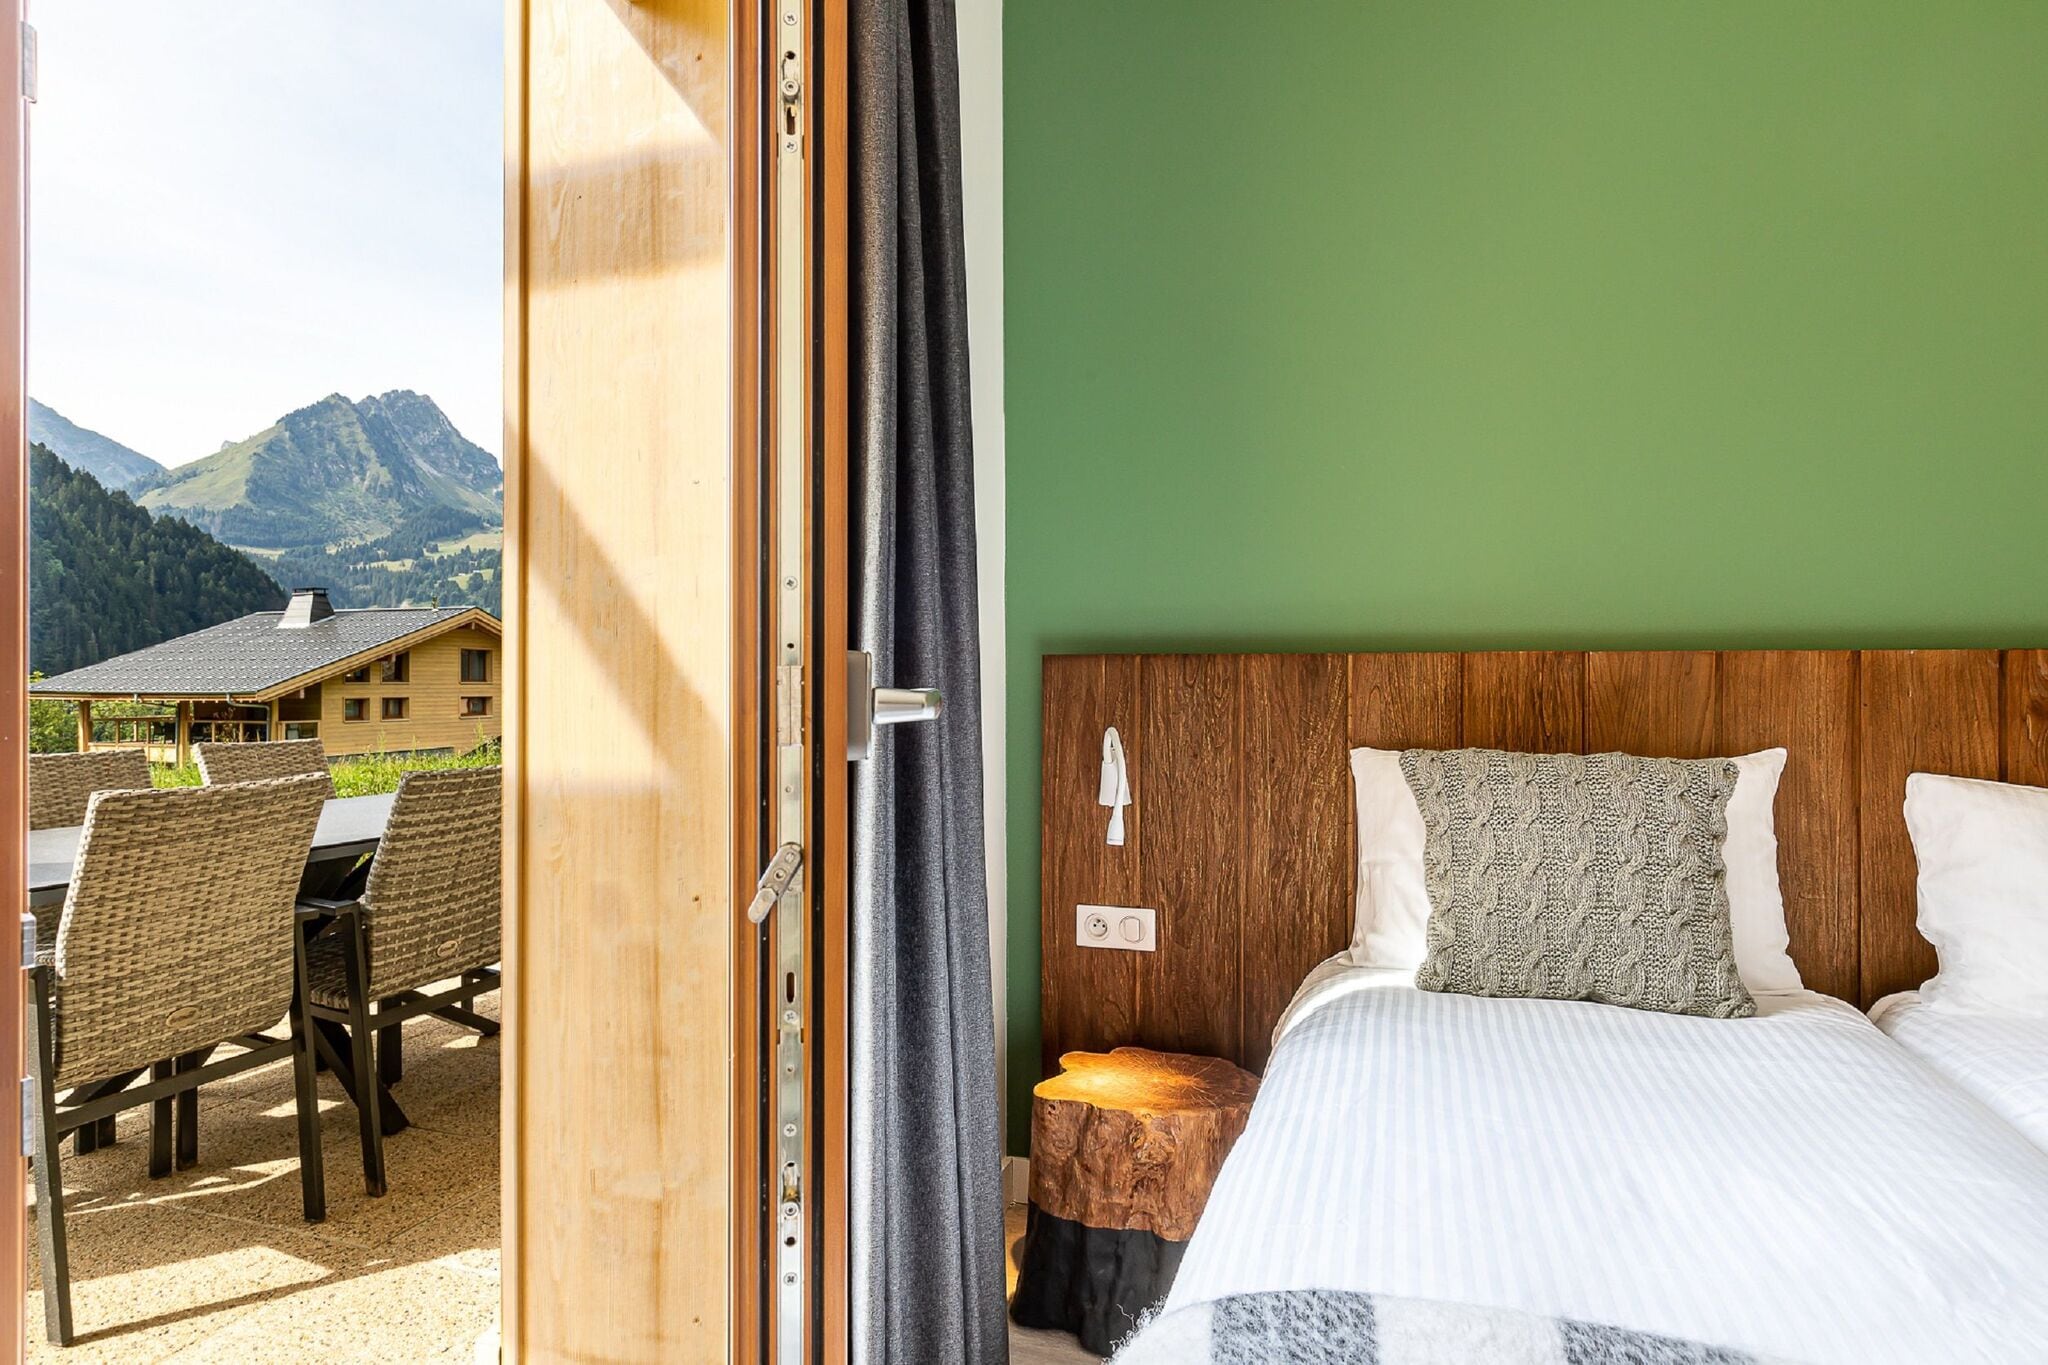 Luxurious apartment with terrace, ski lift 1.5 km away.